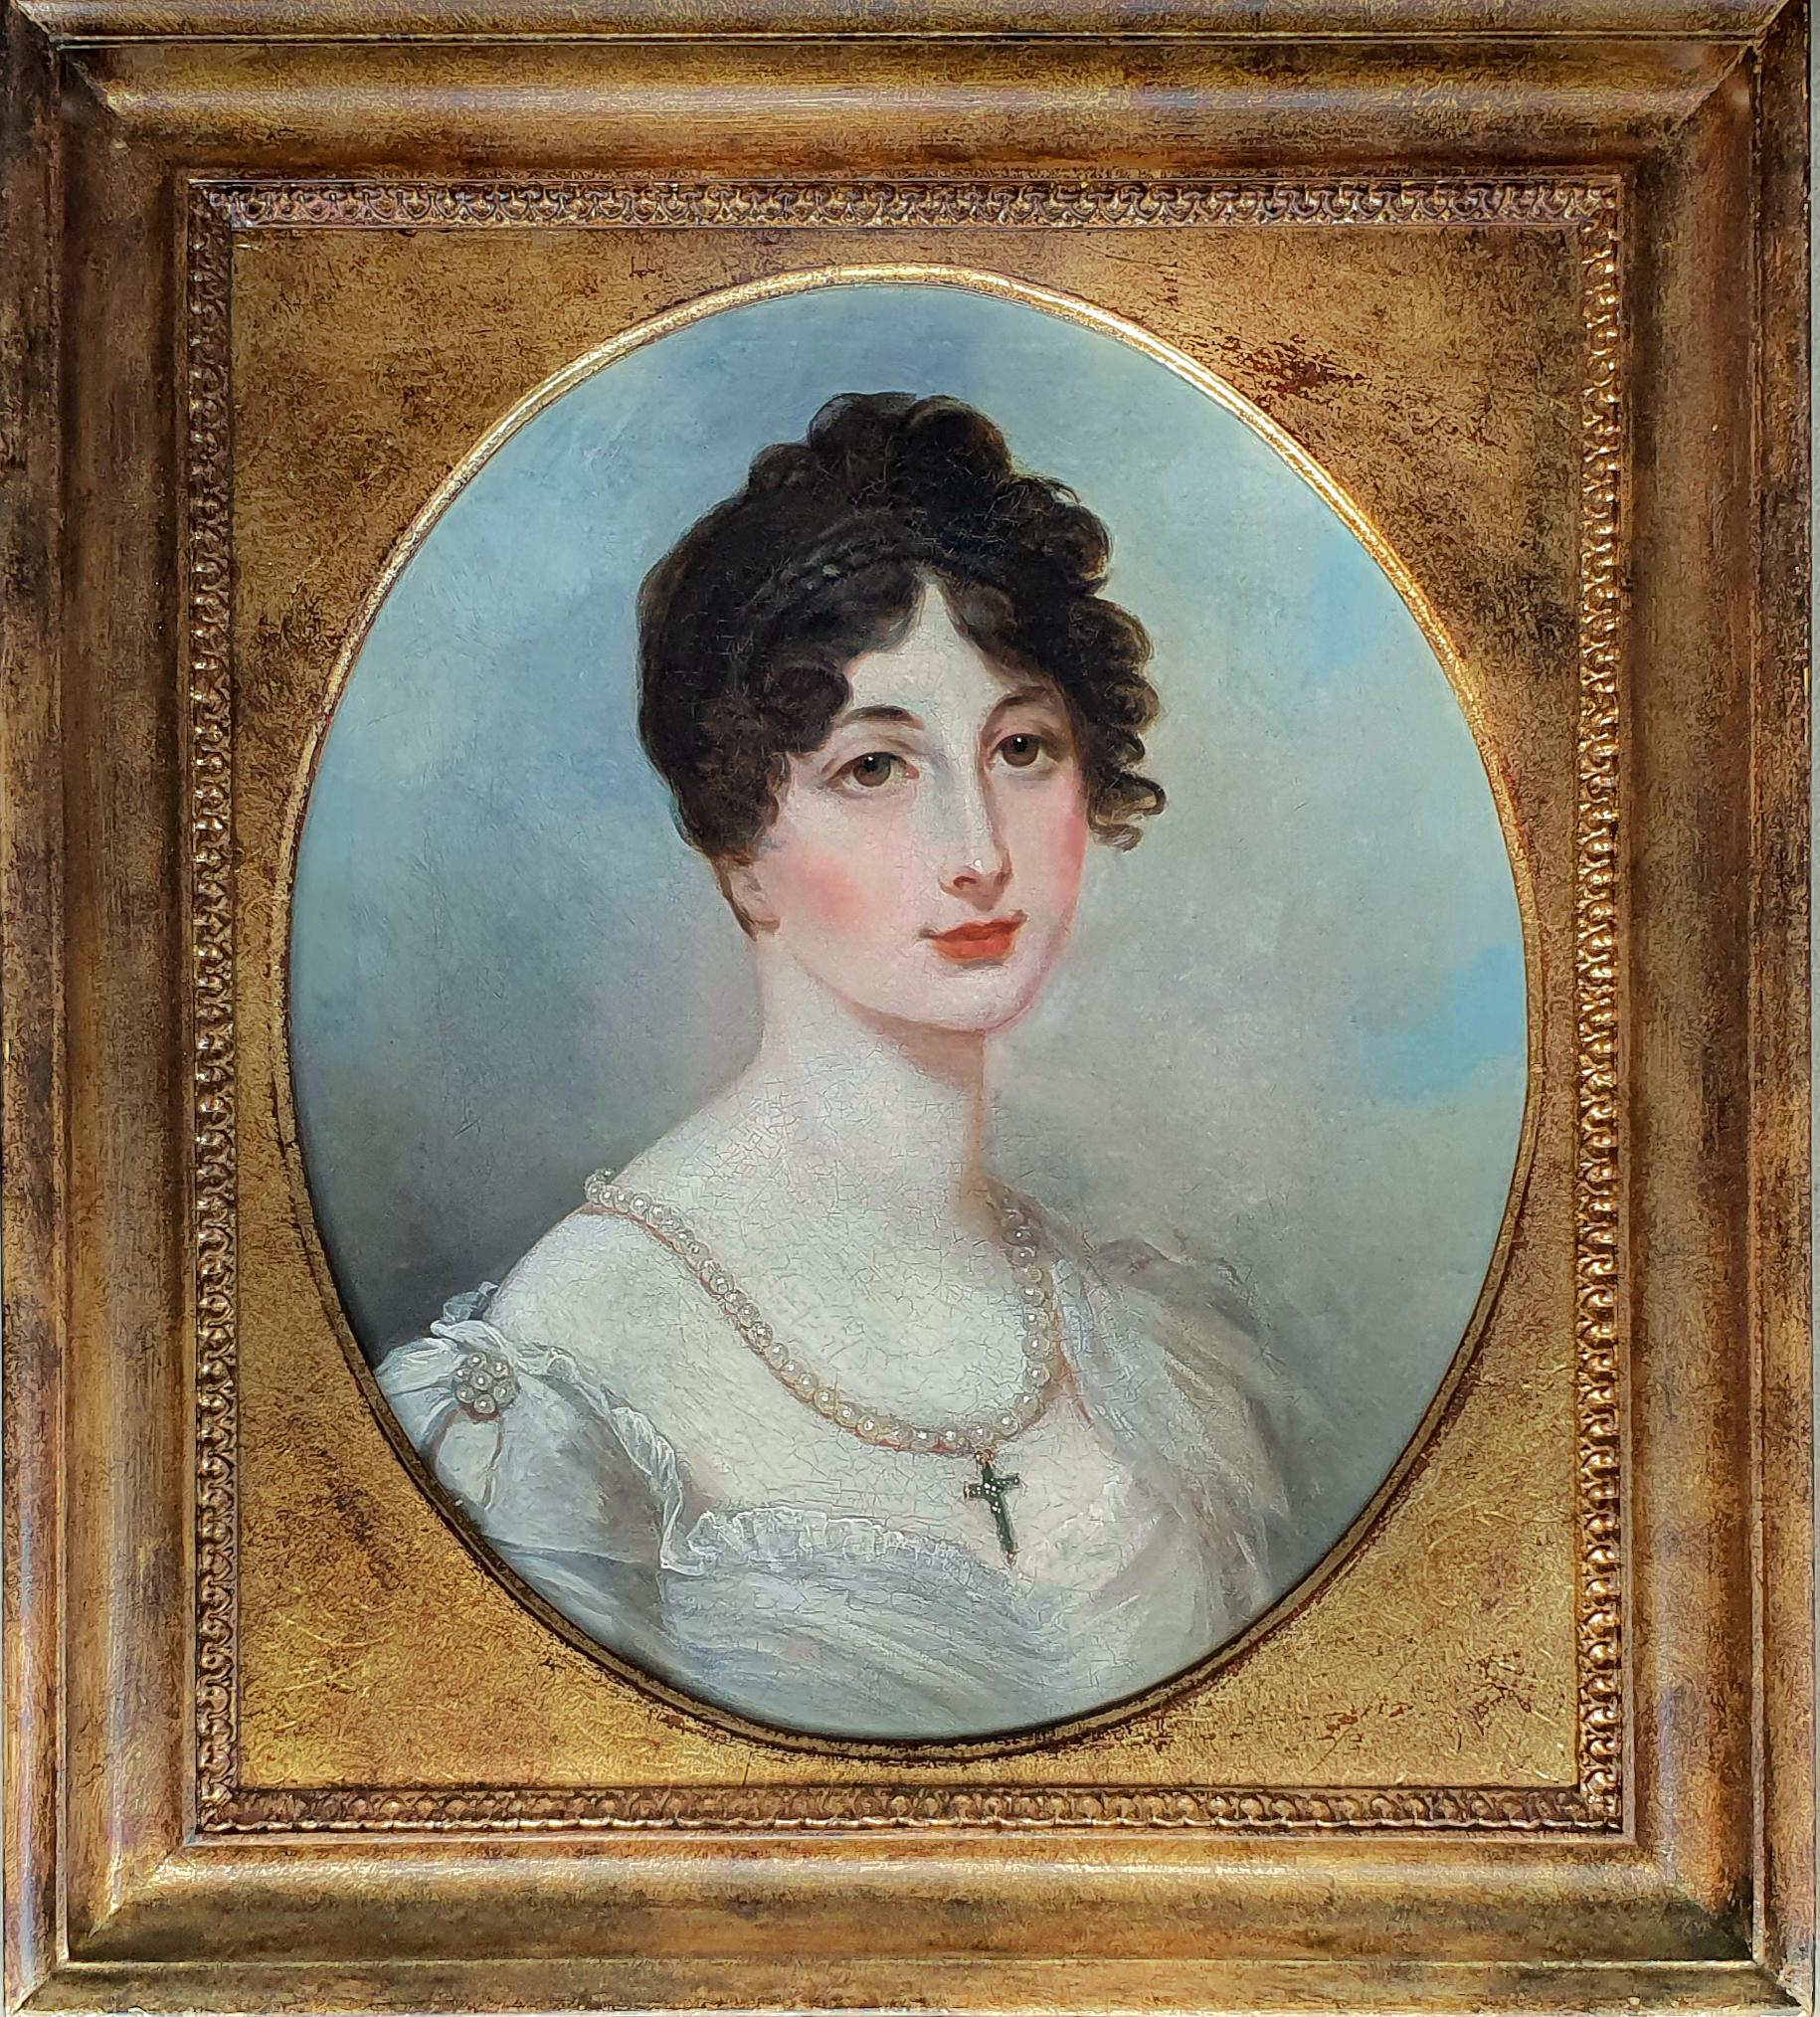 Henry Wyatt Portrait Painting - Portrait of a Lady in a White Dress, Henry Whatt, Regency Period oil painting